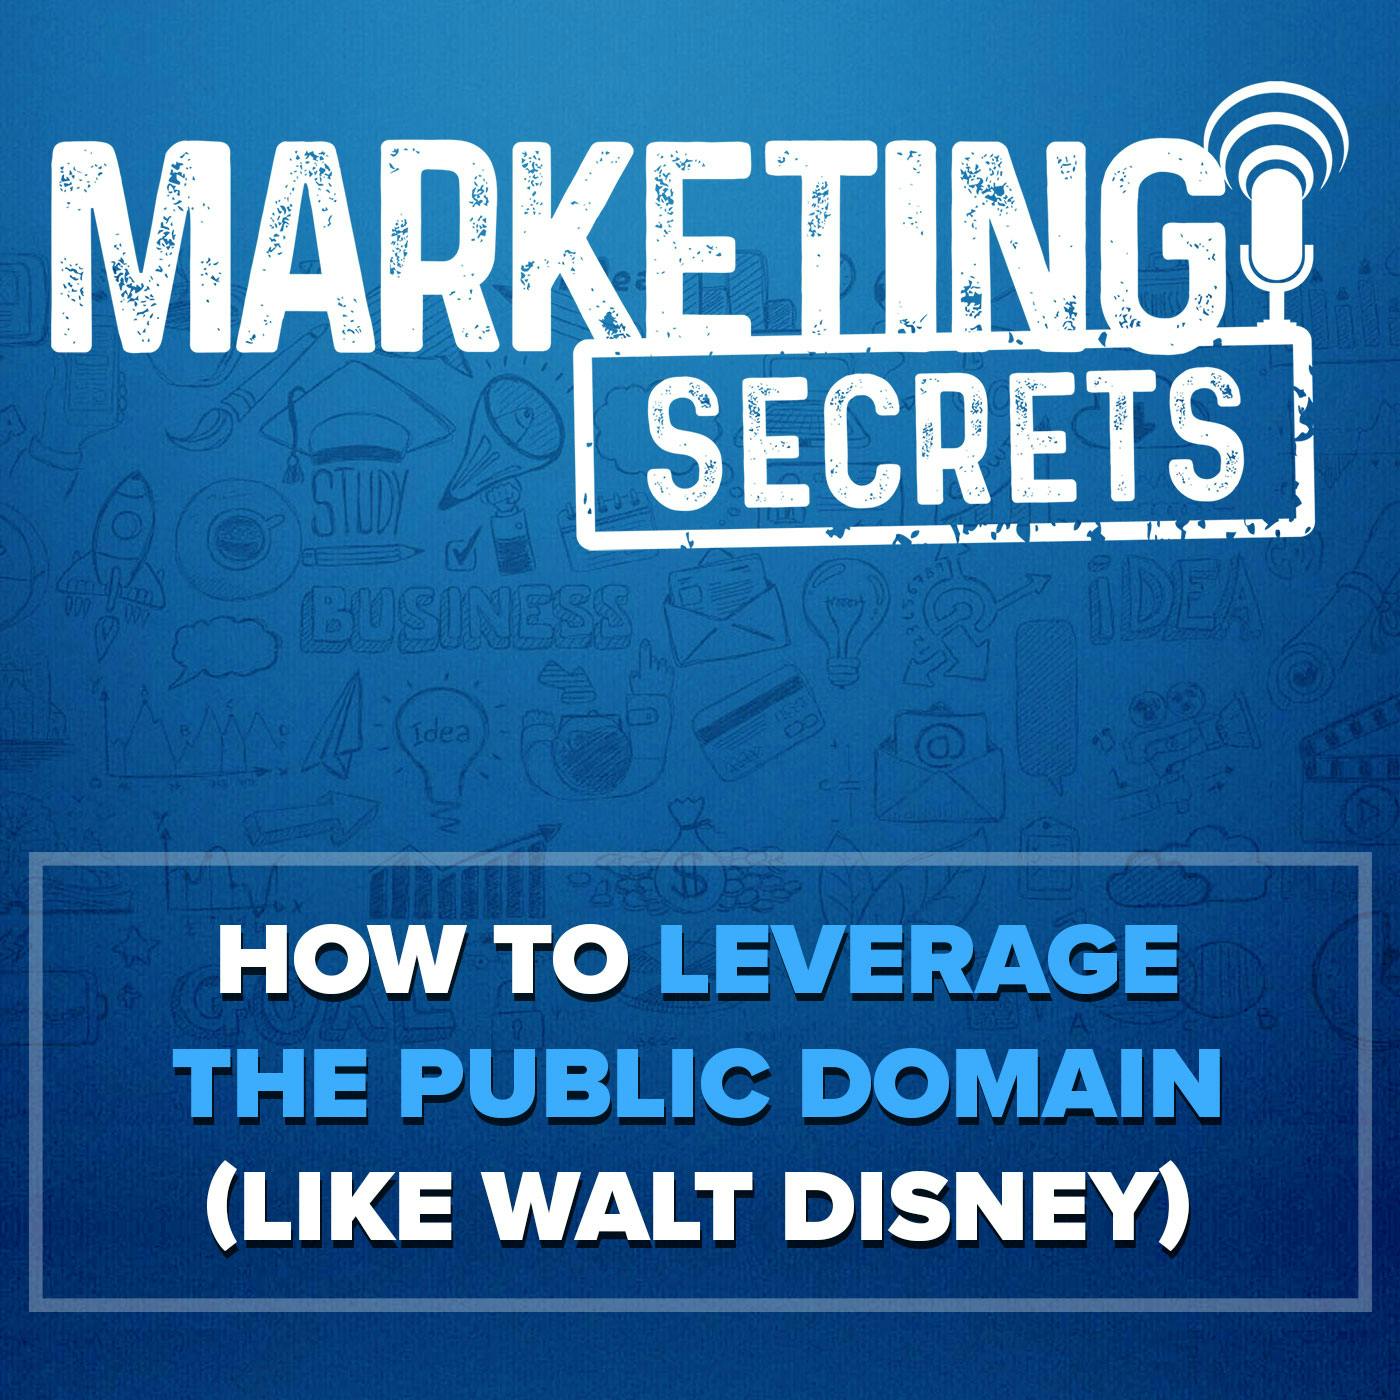 How To Leverage the Public Domain (Like Walt Disney)